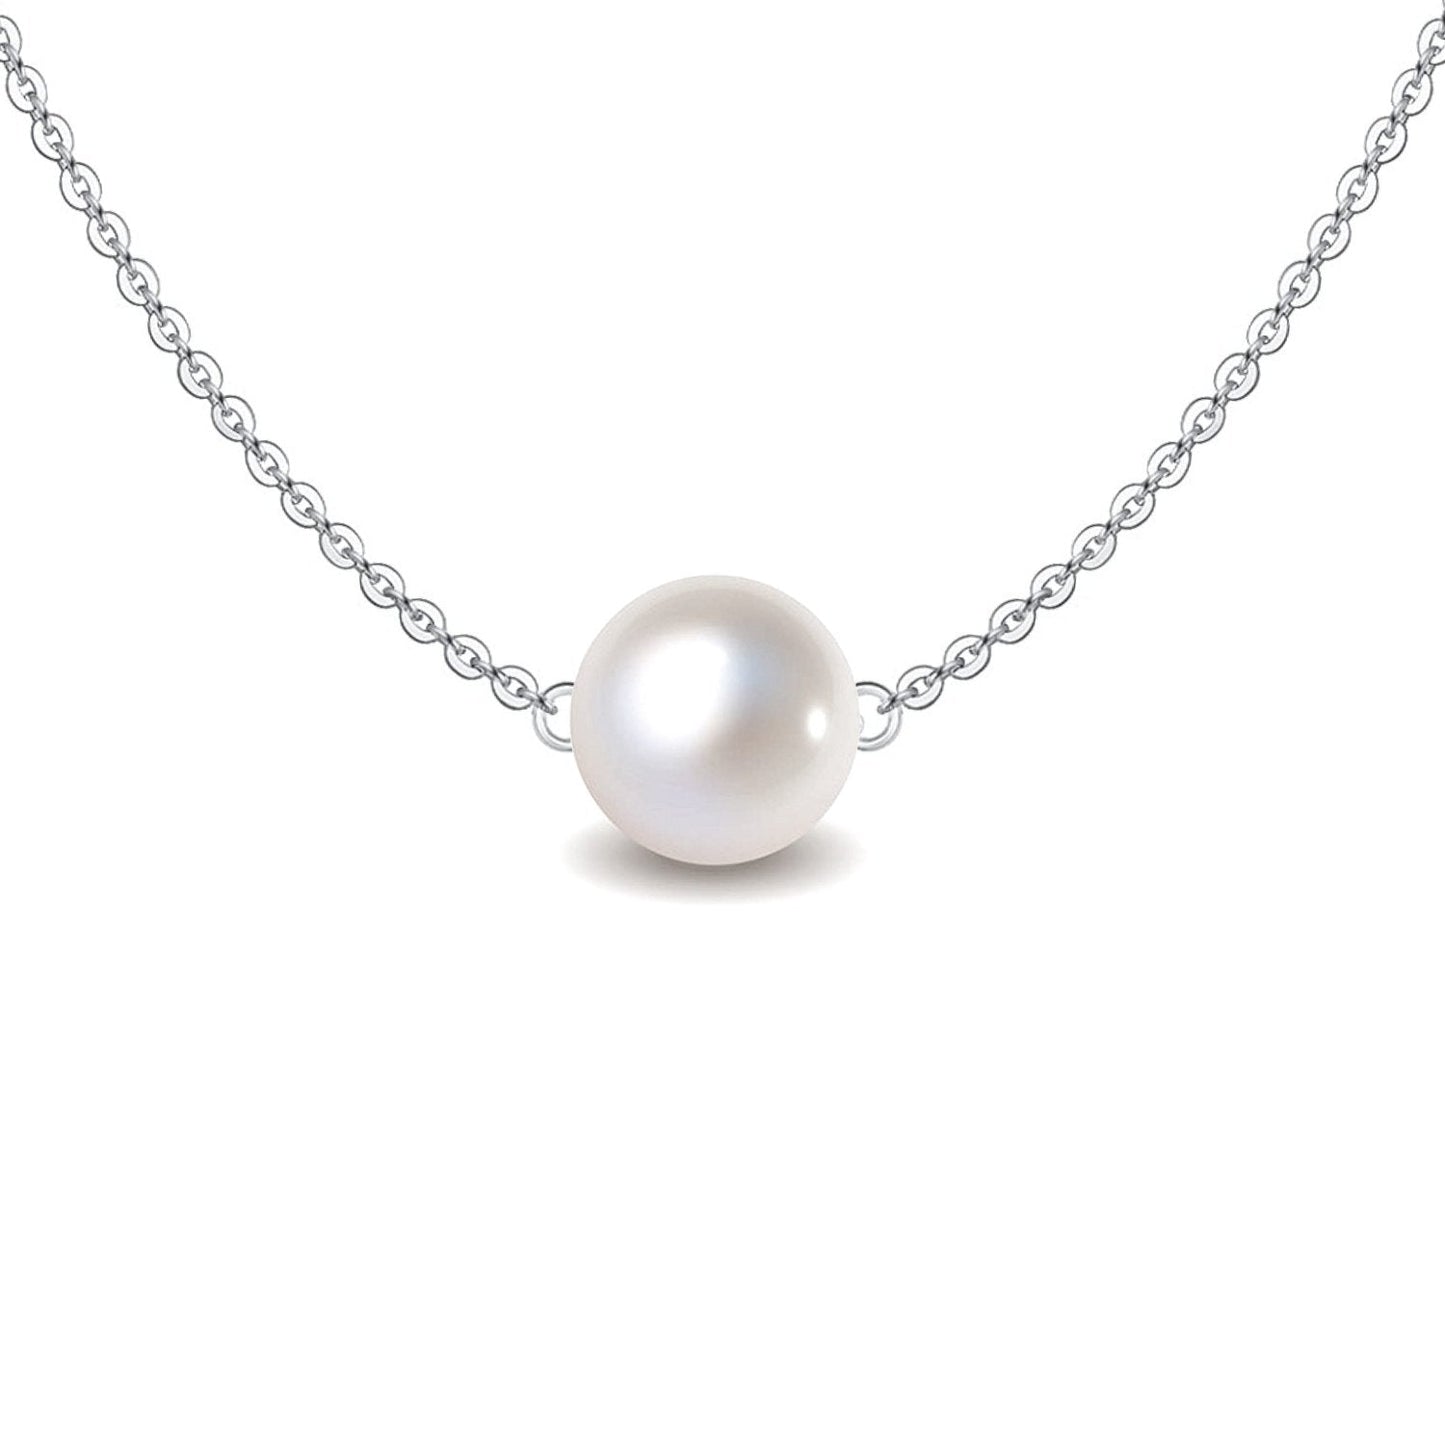 Classic Moon Pearl Pendant - Round White South Sea Pearl